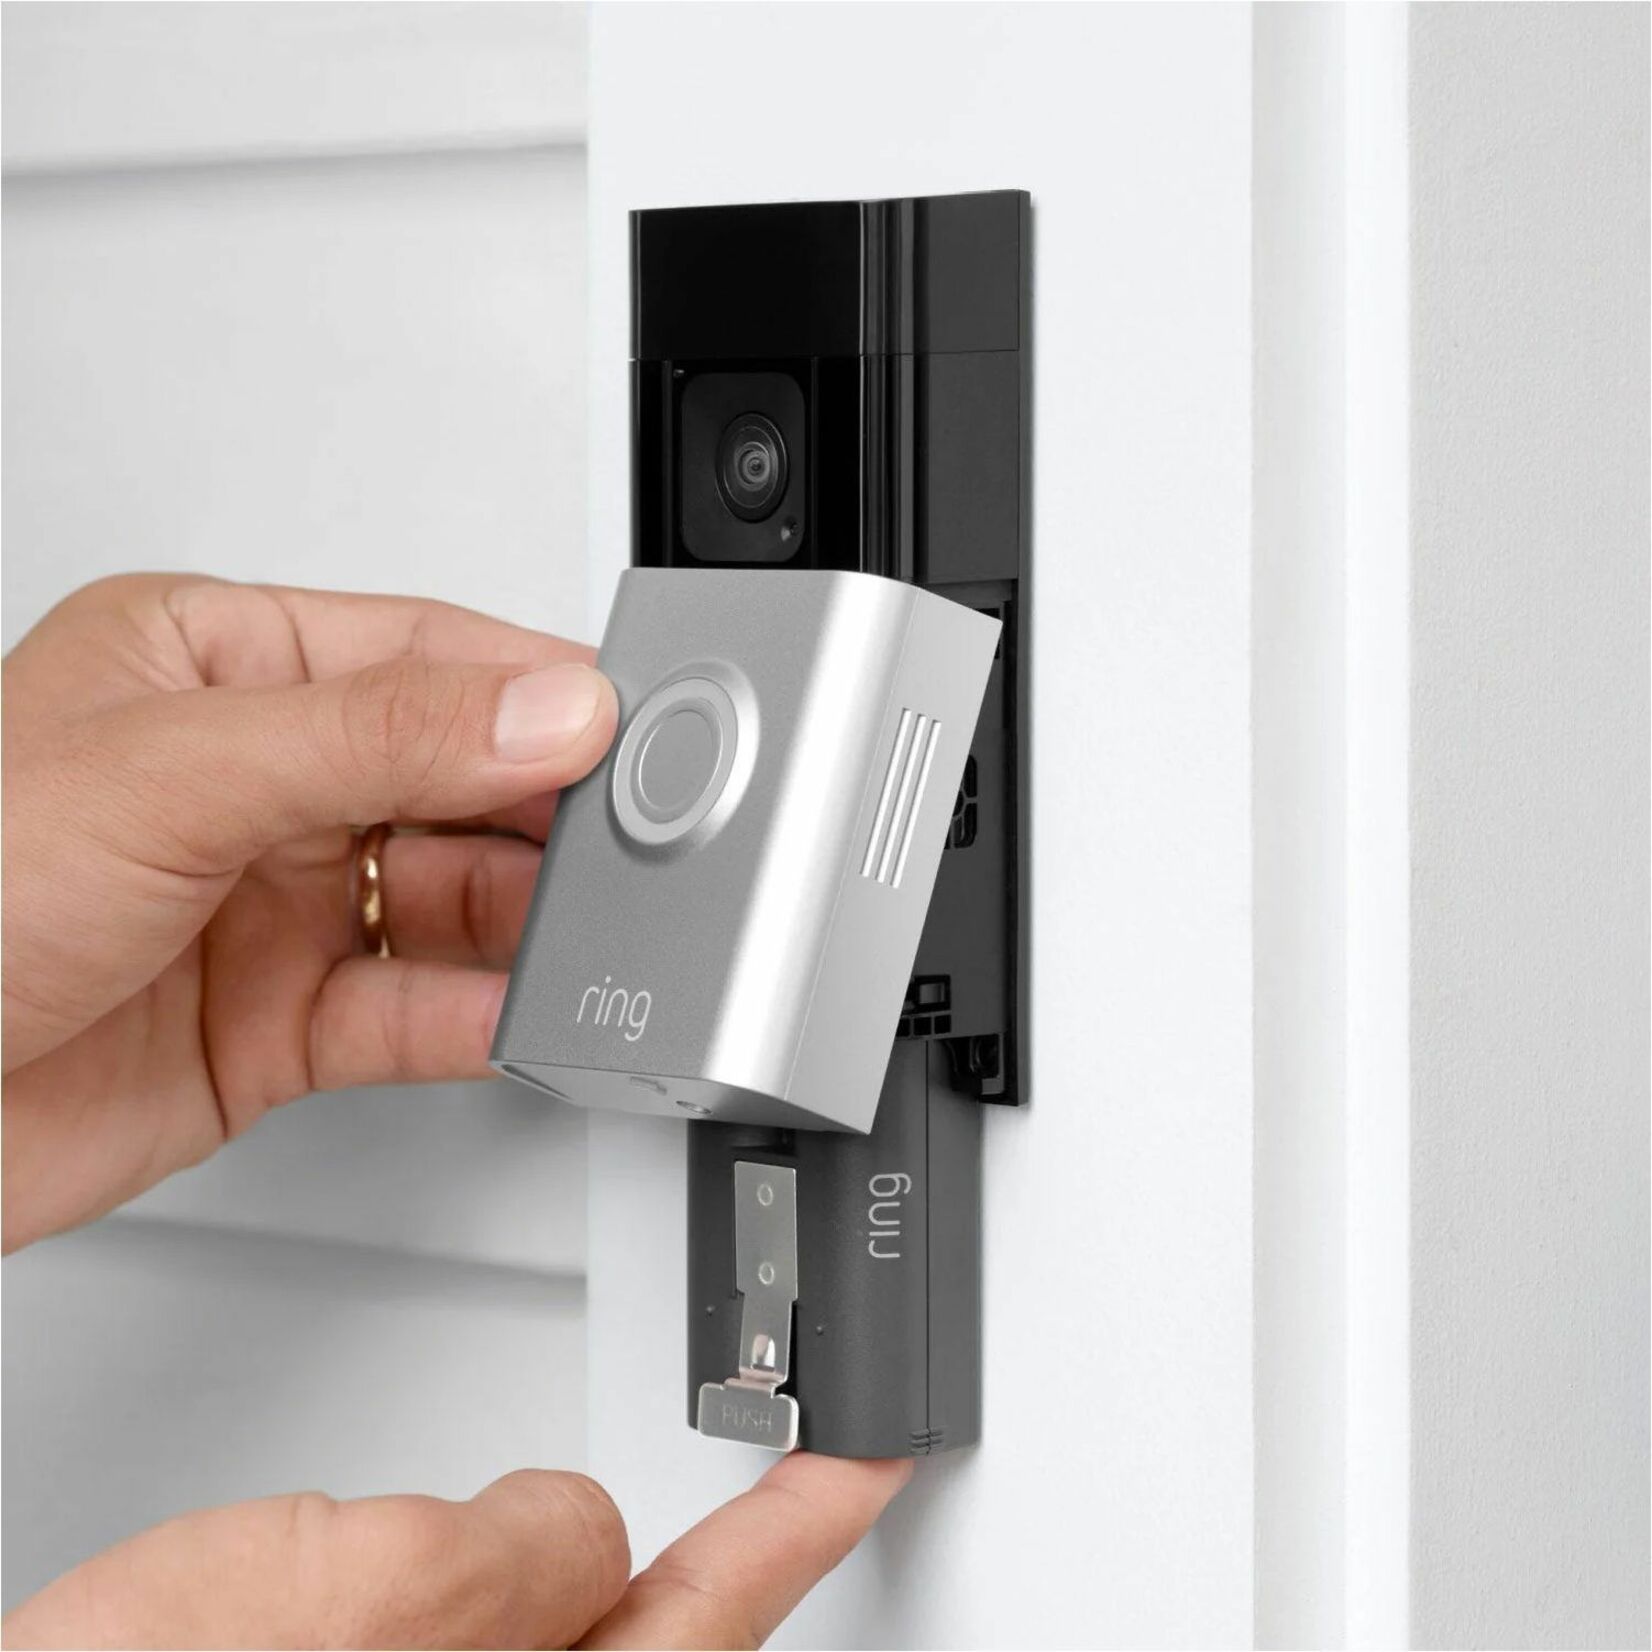 Ring B09WZBPX7K Battery Doorbell Plus Video Doorbell, Rechargeable Battery, Satin Nickel, Wi-Fi, Alexa Supported